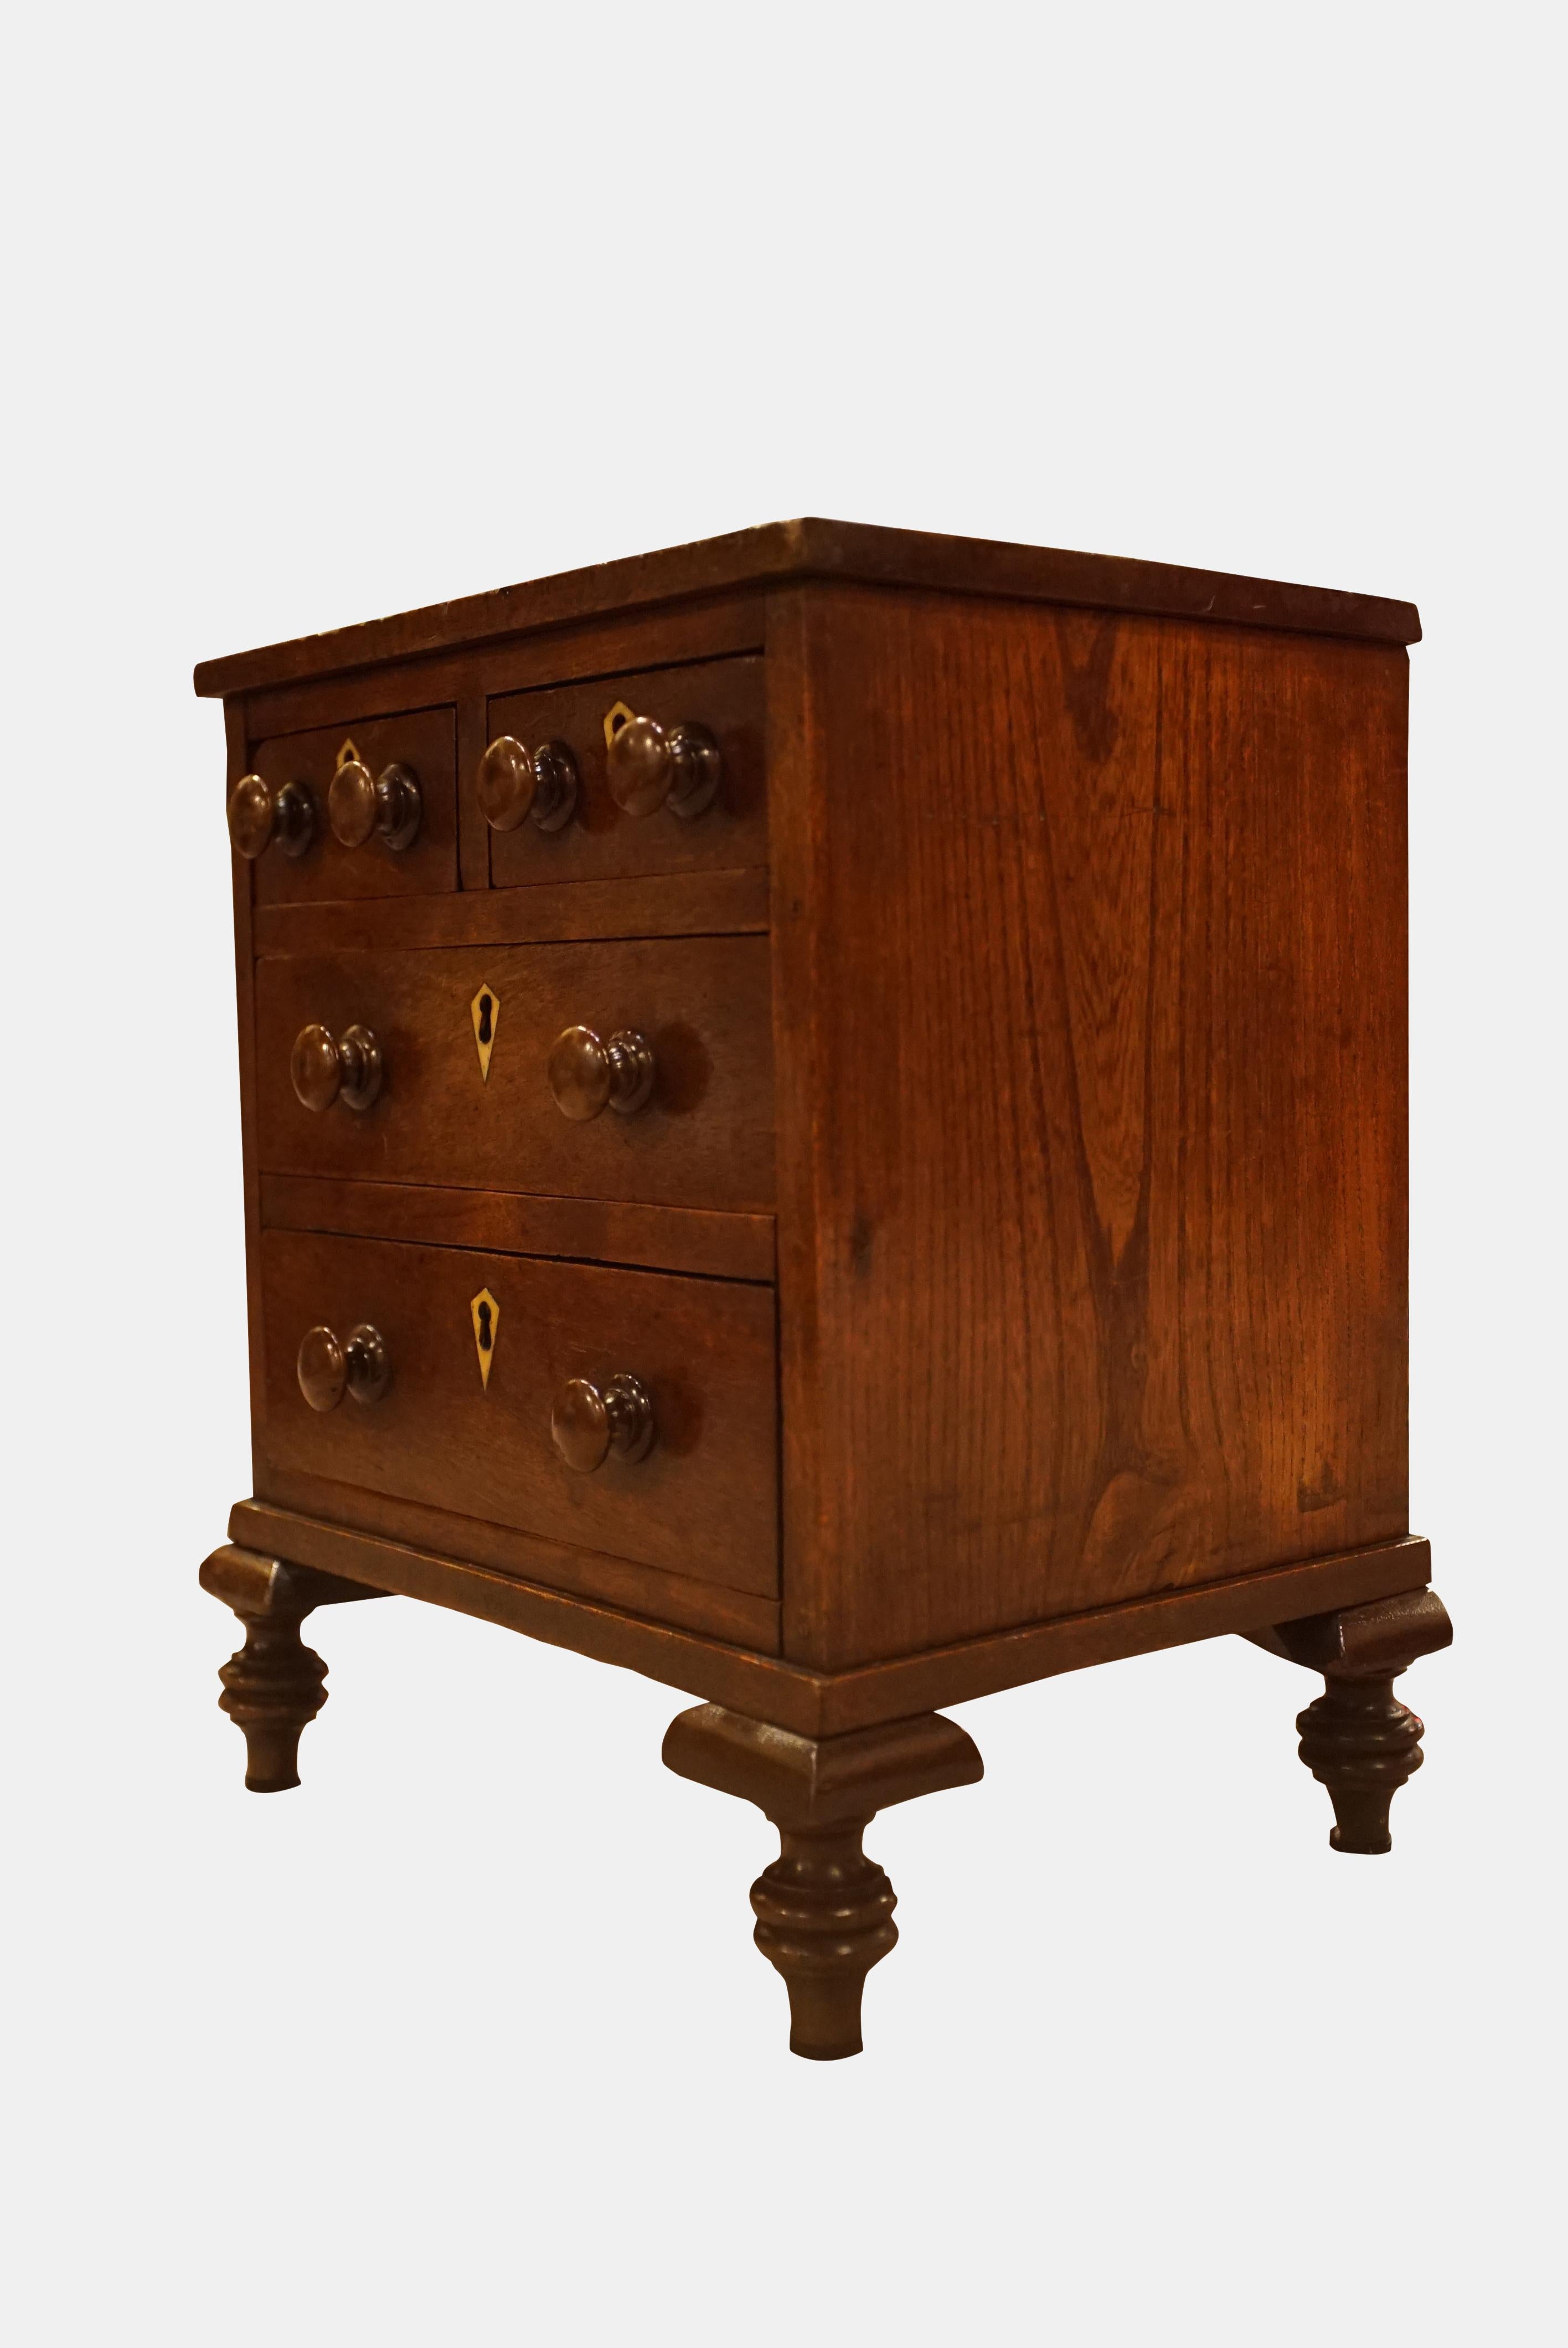 A George III Mahogany Miniature chest of drawers with turned pulls, ivory escutcheons, raised on turned feet.